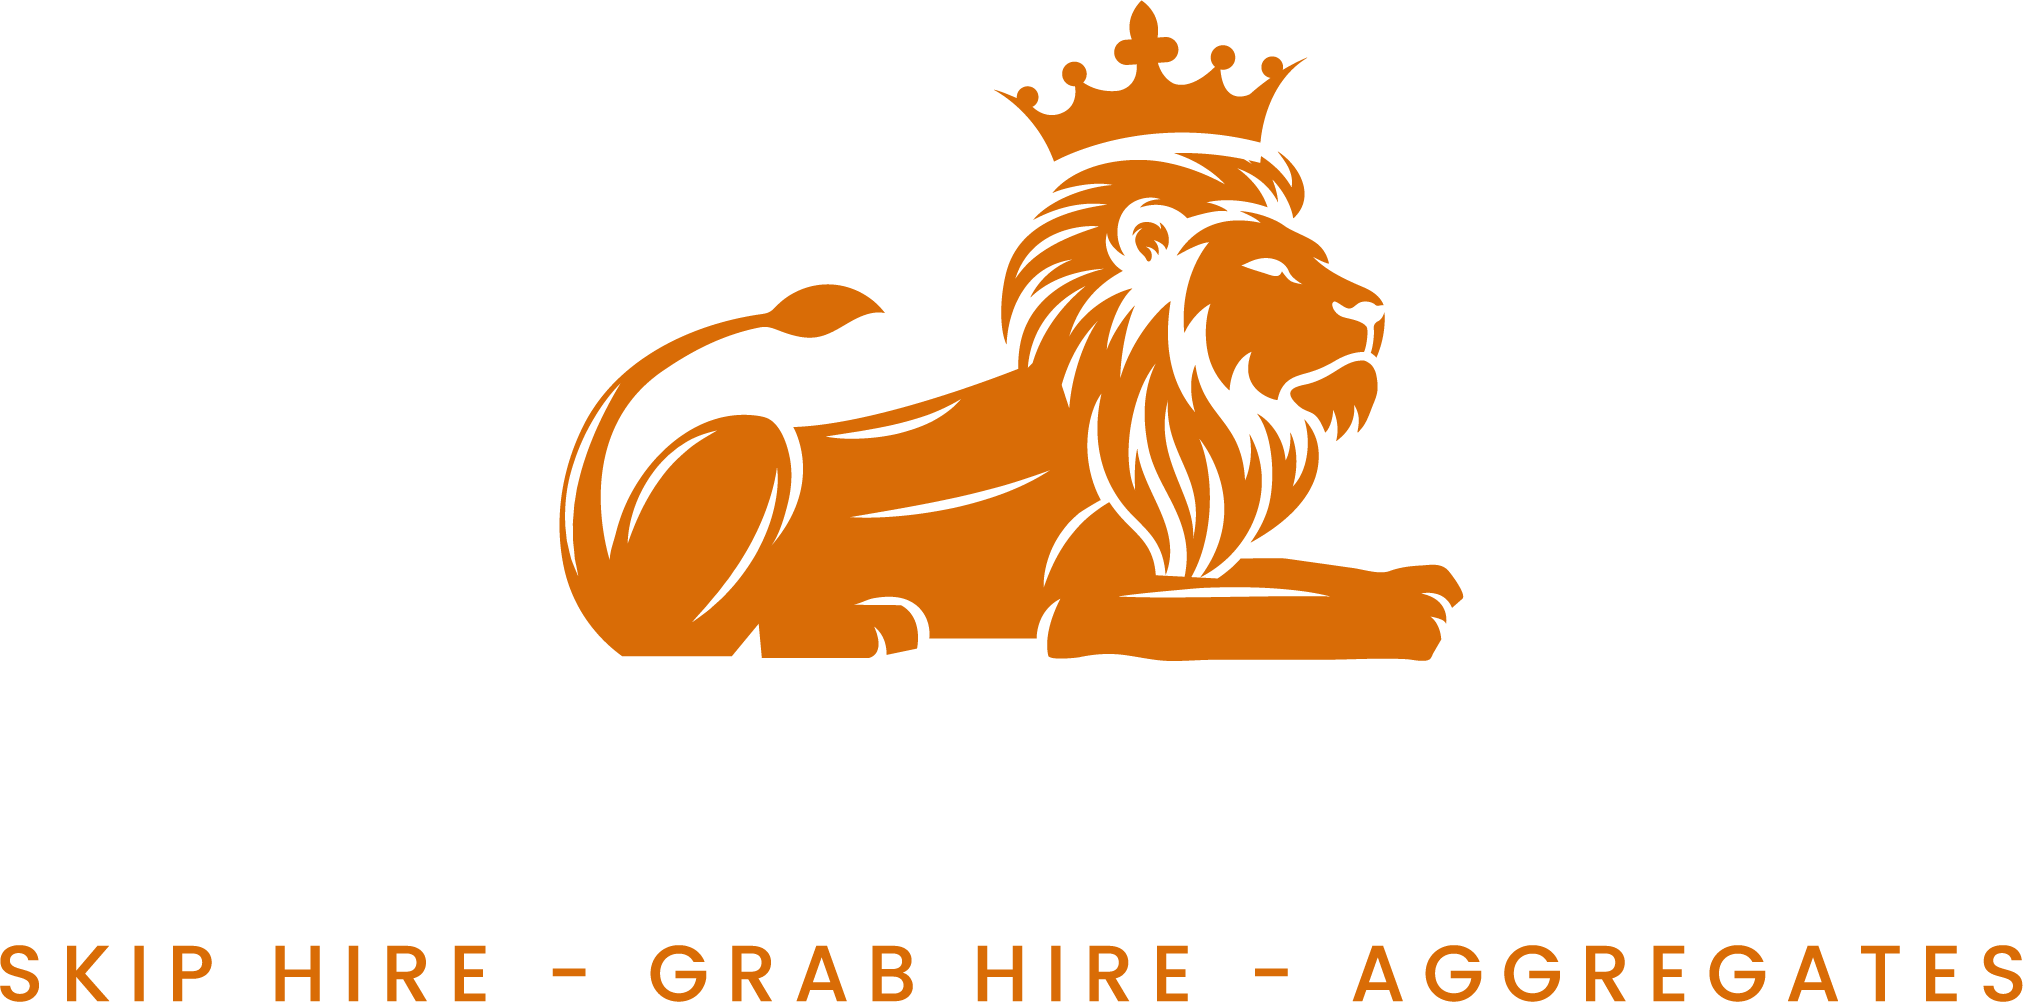 singh's skip hire mobile logo